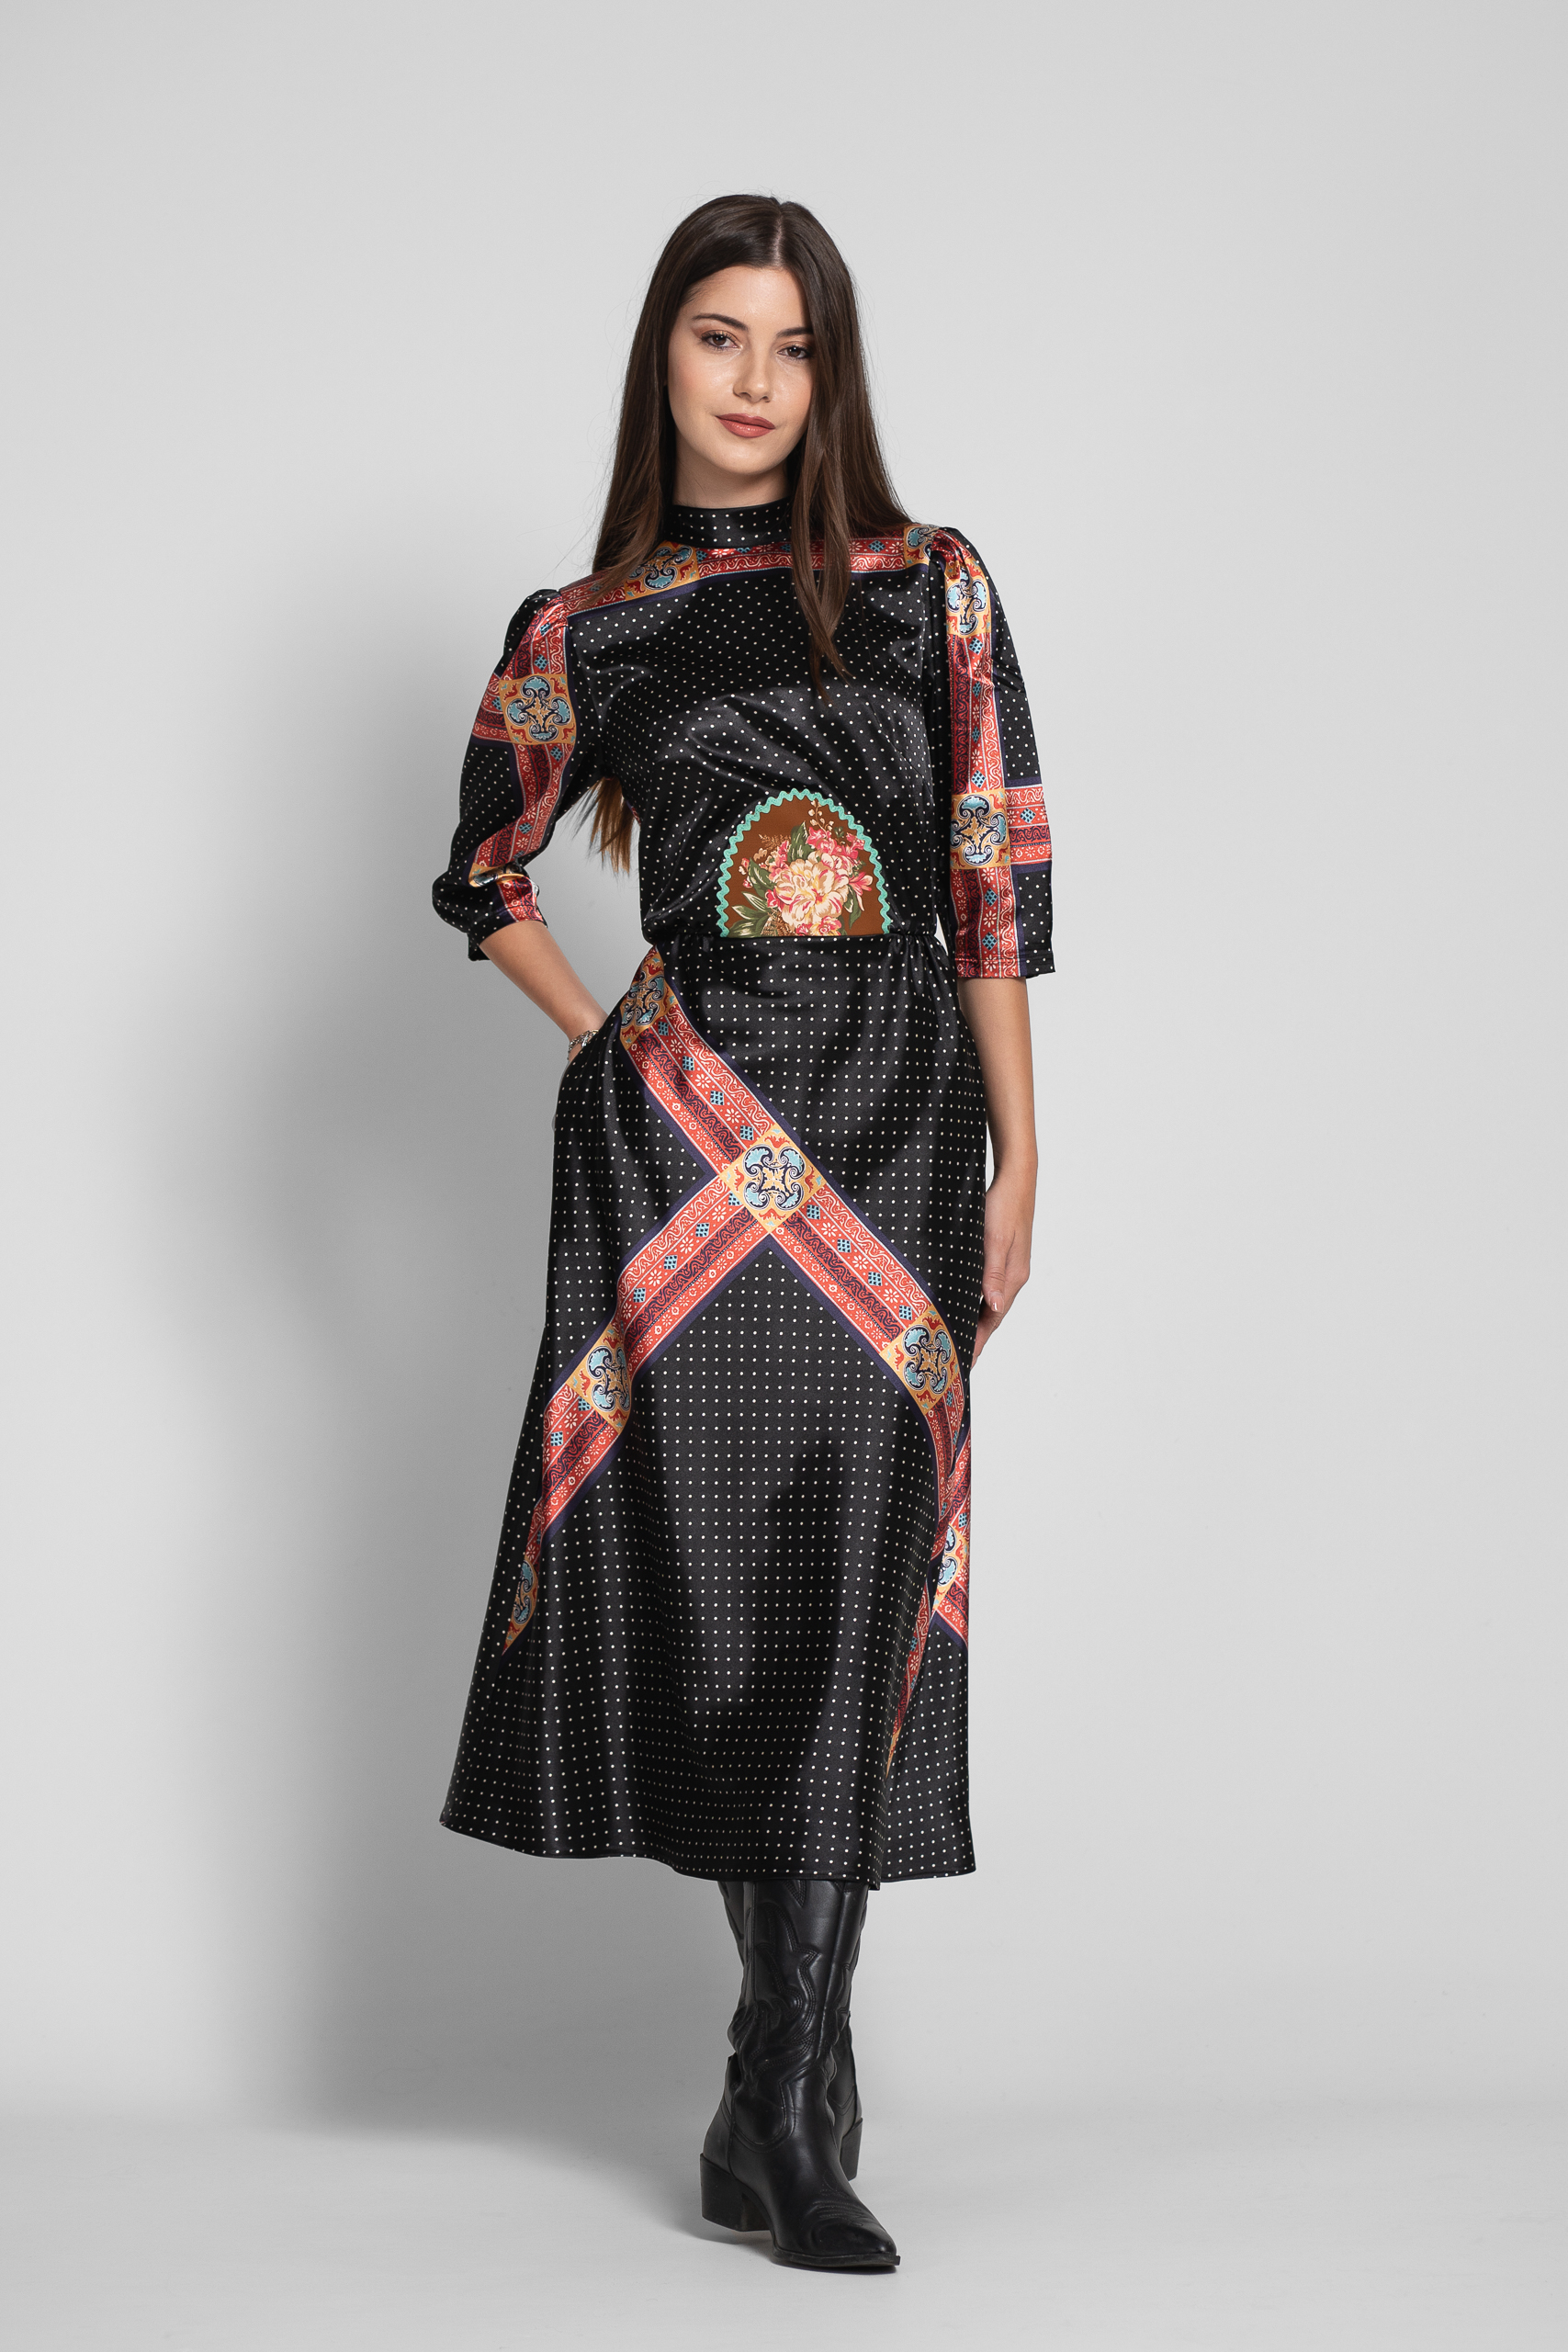 LORENE elegant satin dress. Natural fabrics, original design, handmade embroidery